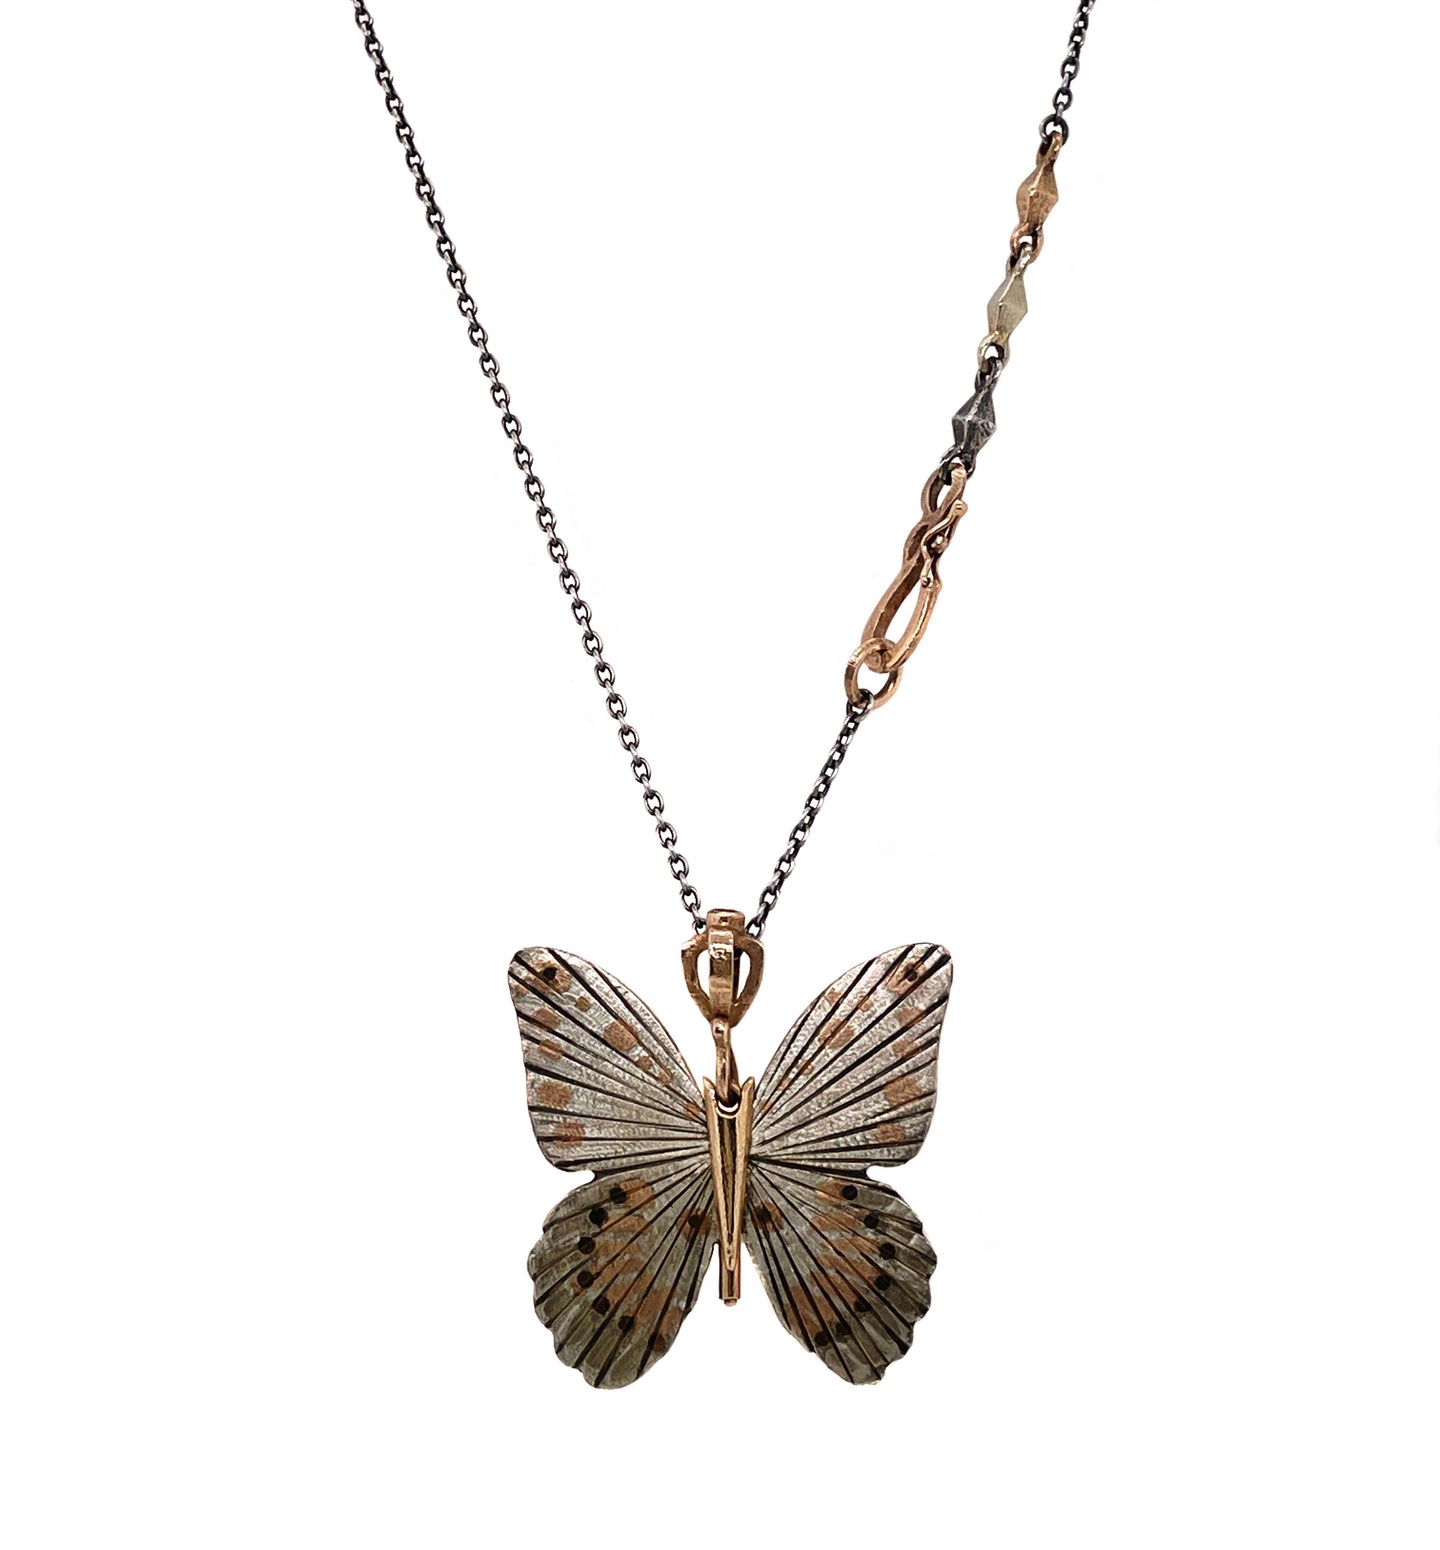 Goliath Birdwing Butterfly Necklace